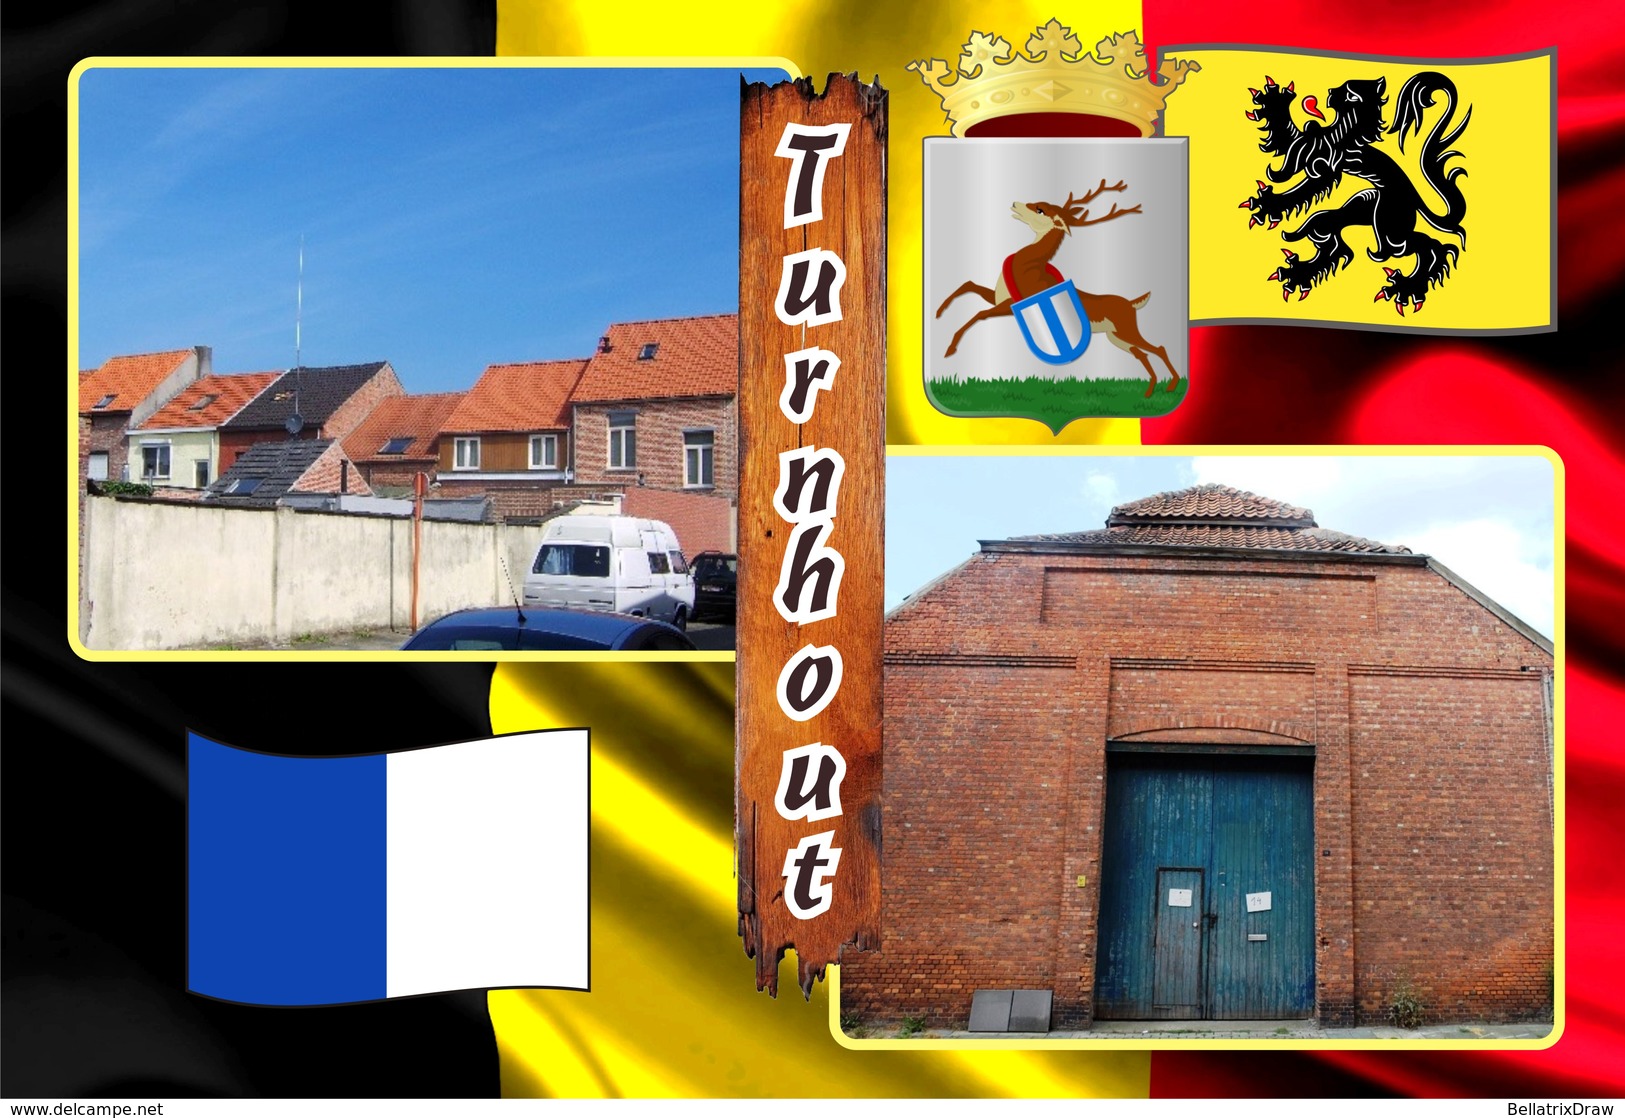 Postcards, REPRODUCTION, Municipalities of Belgium, Turnhout, duplex 244 to 294 - set of 51 pcs.